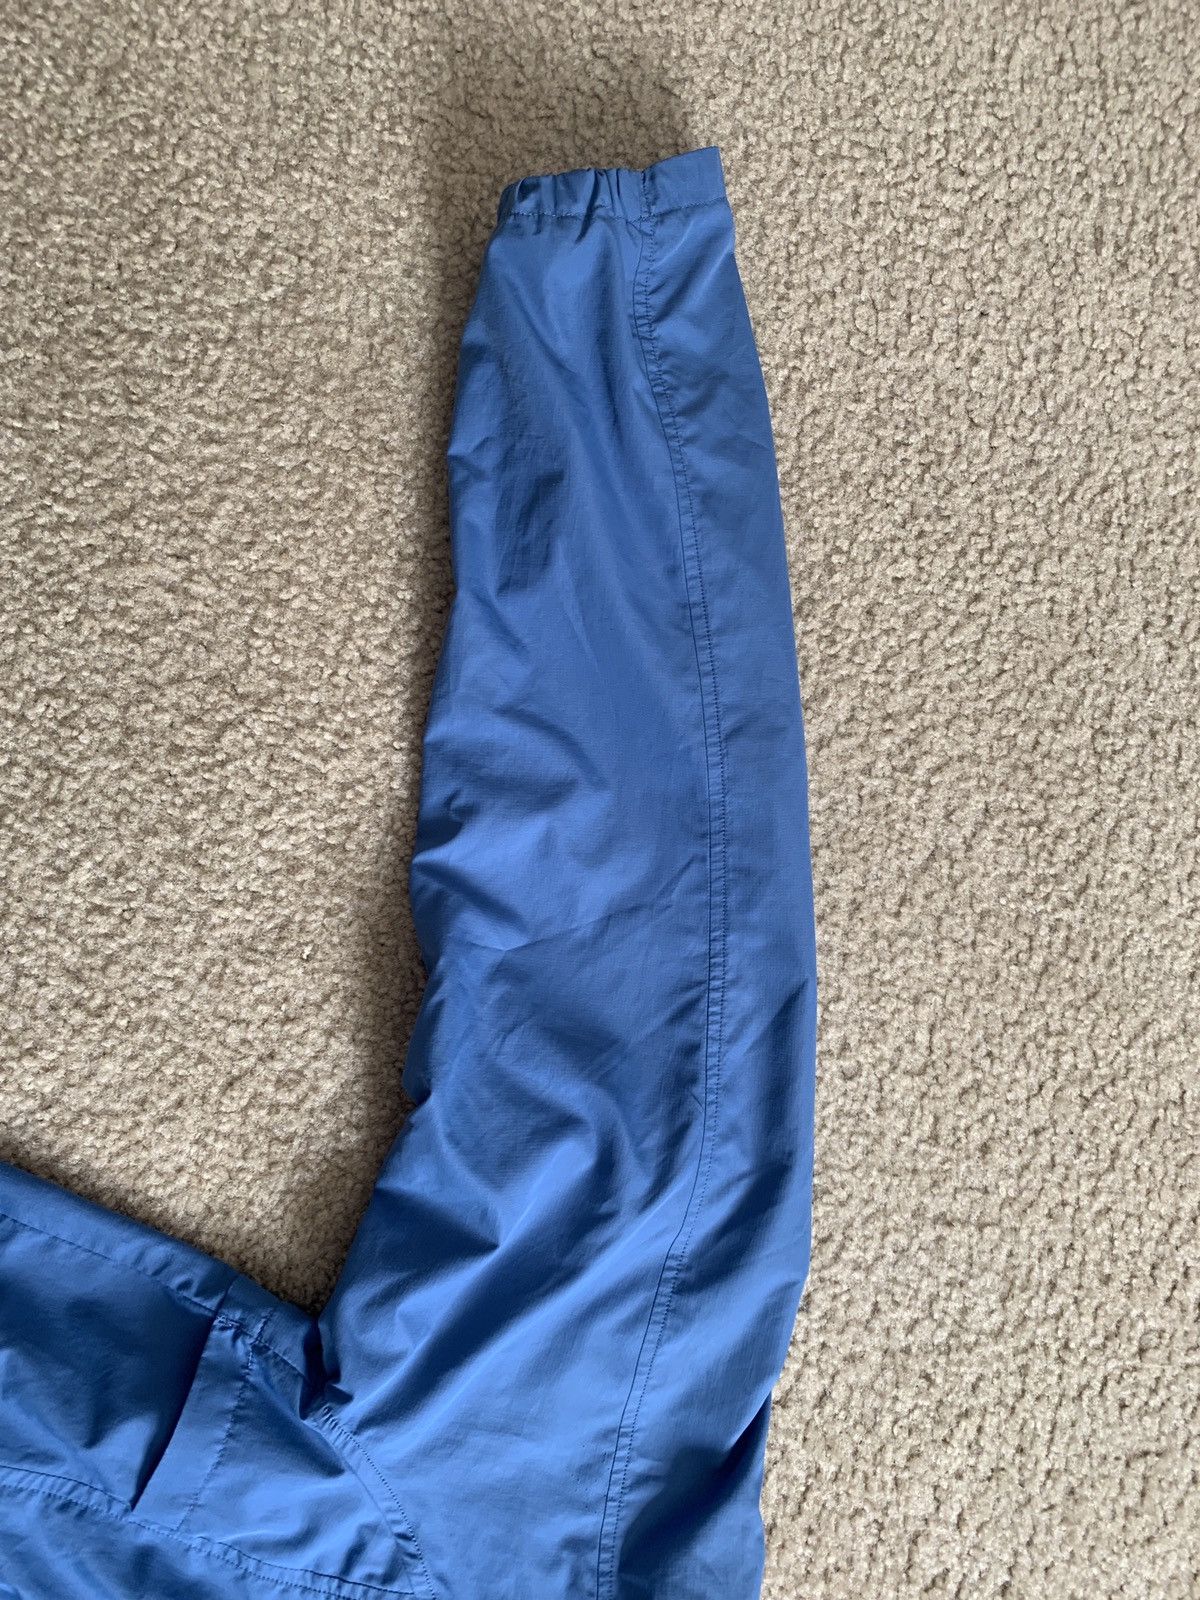 Rei Rei Raincoat Jacket (Blue) Size US S / EU 44-46 / 1 - 8 Thumbnail